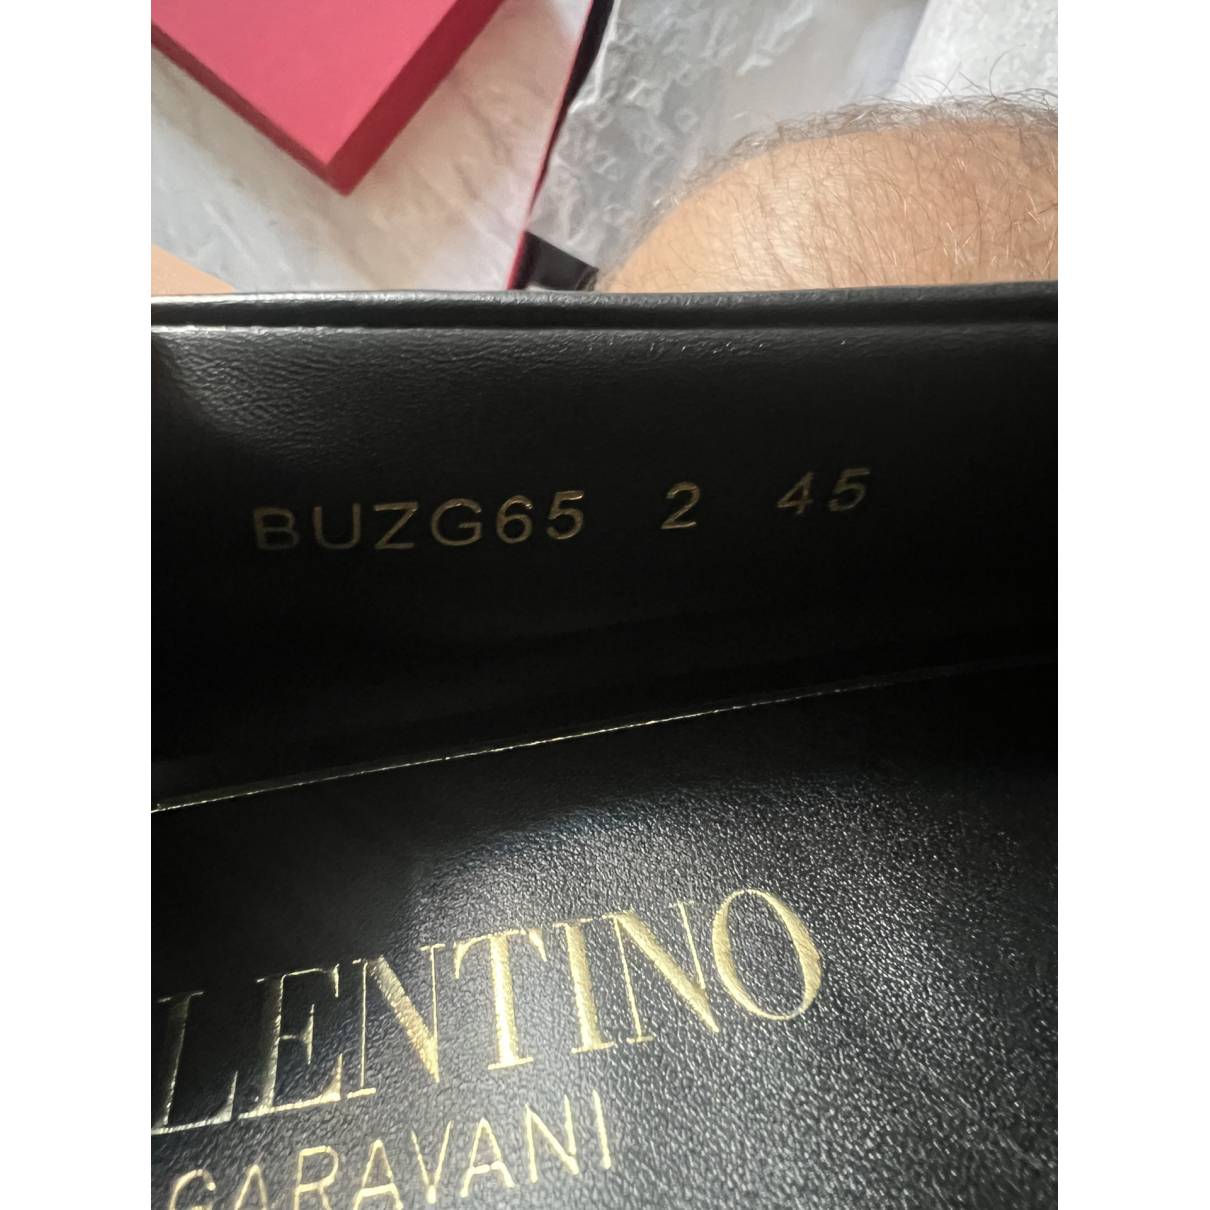 Buy Valentino Garavani Leather flats online